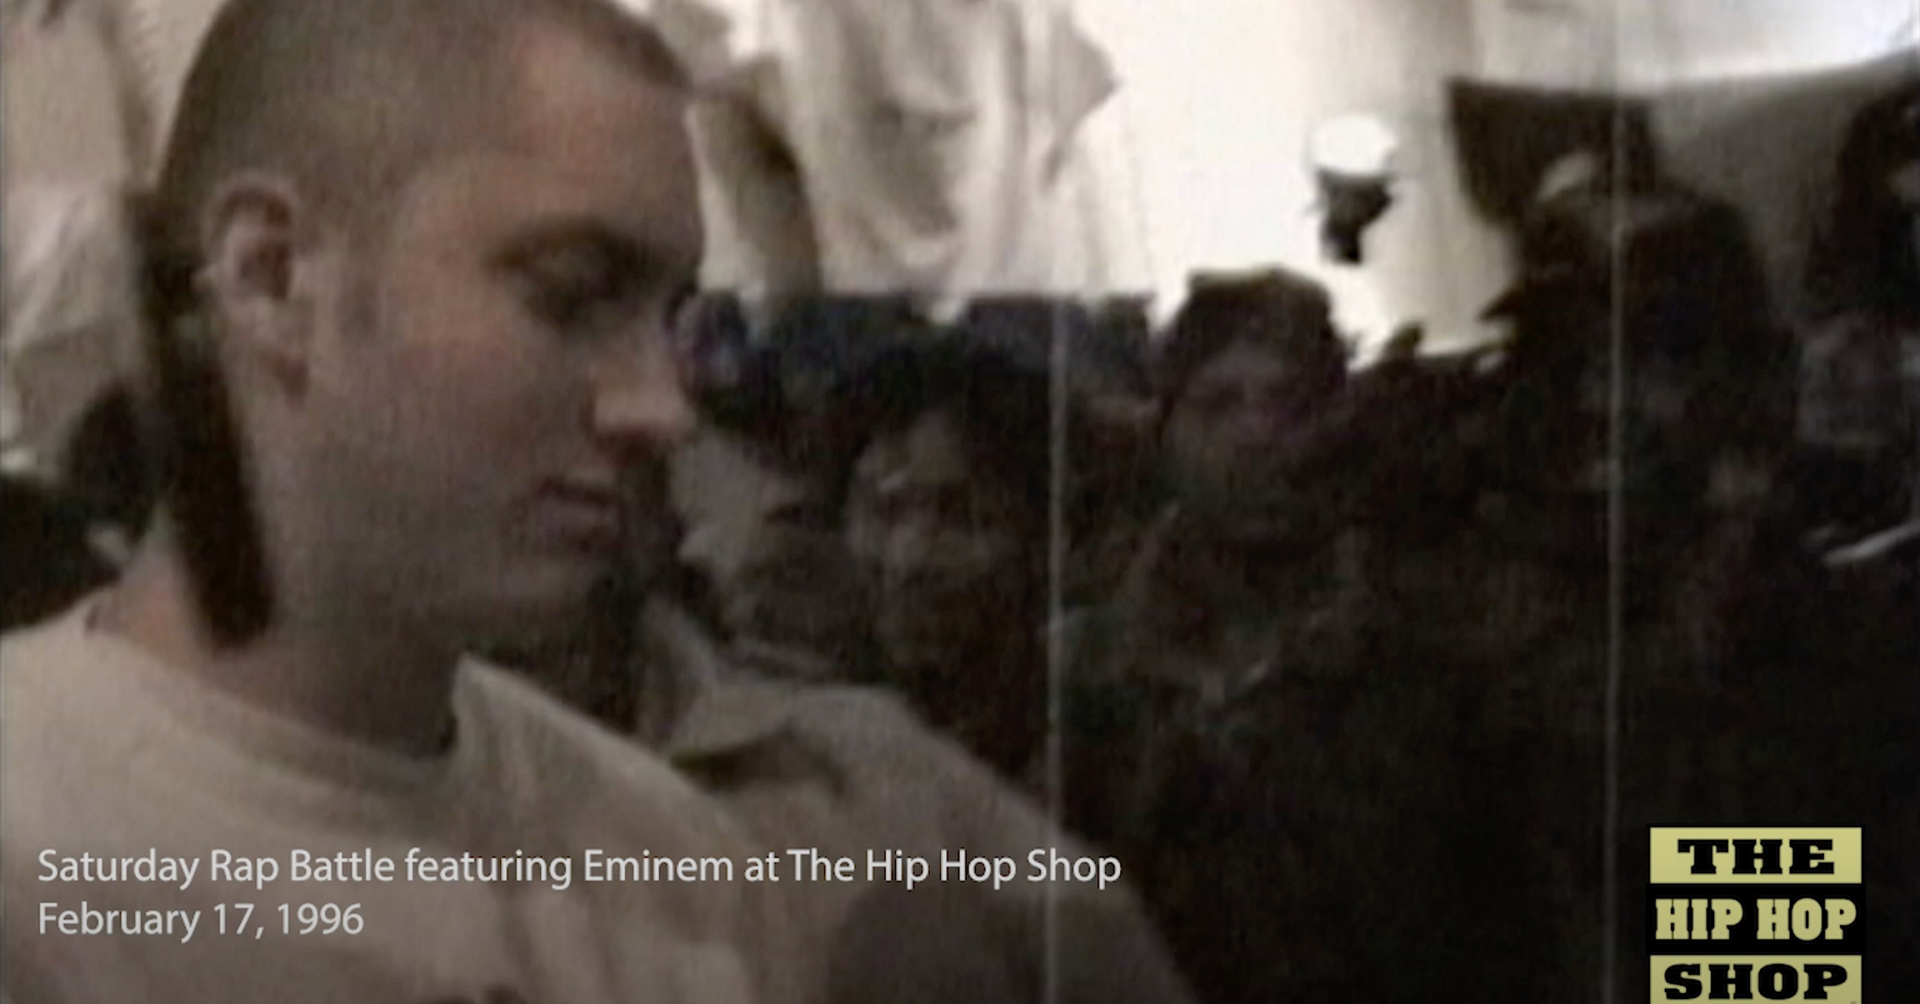 Load video: Saturday Rap Battle featuring Eminem at The Hip Hop Shop